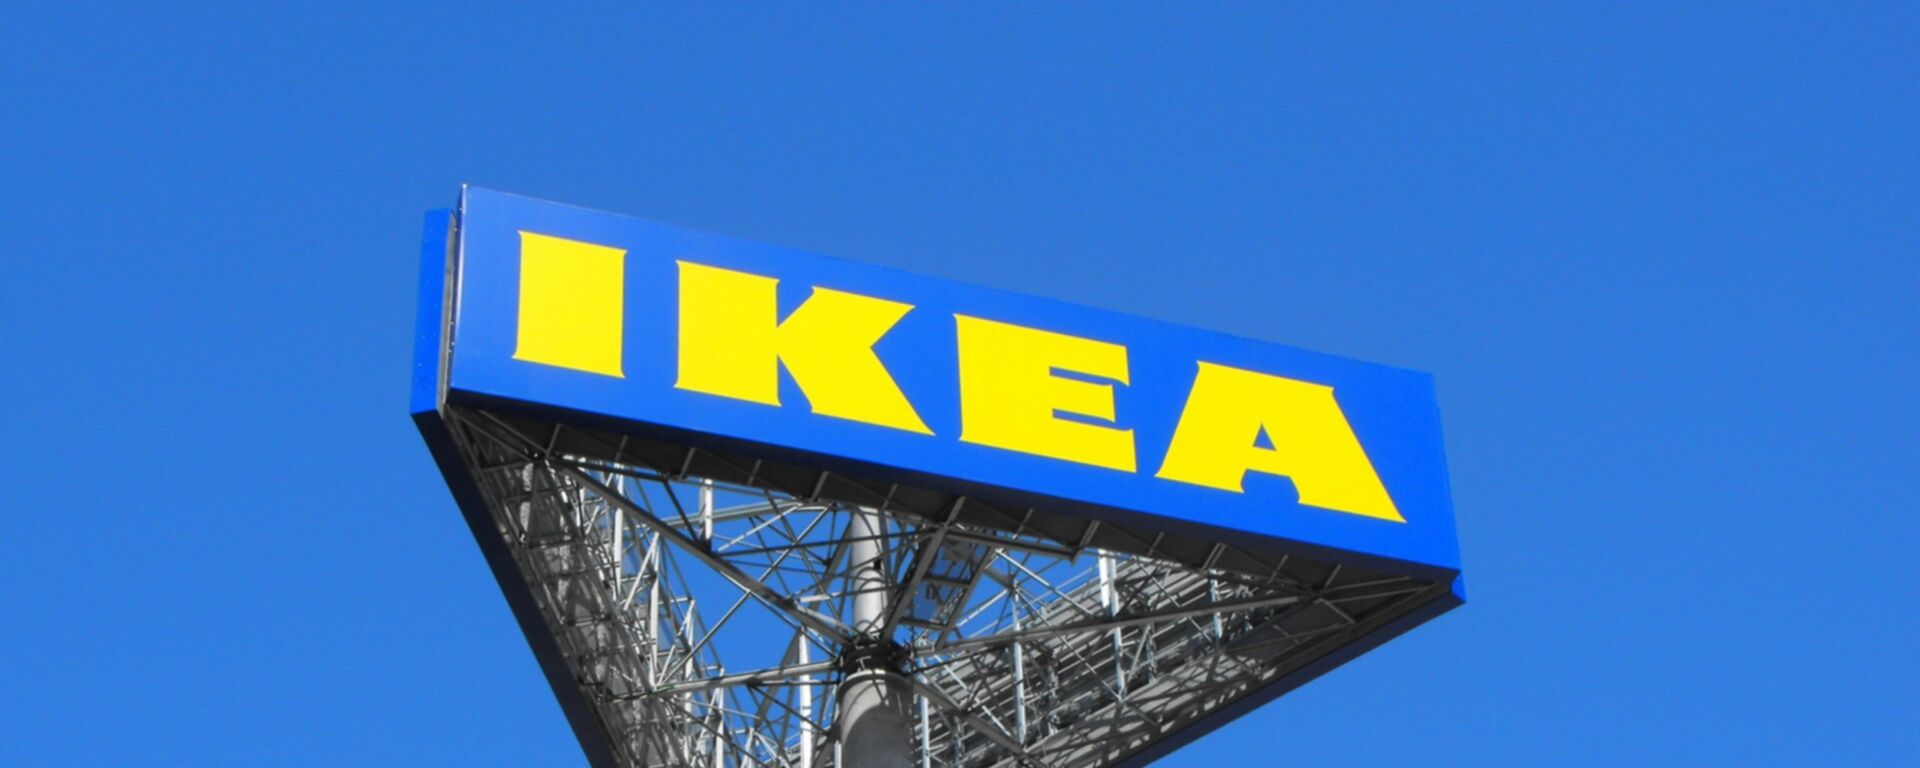 IKEA - Sputnik 日本, 1920, 04.11.2021